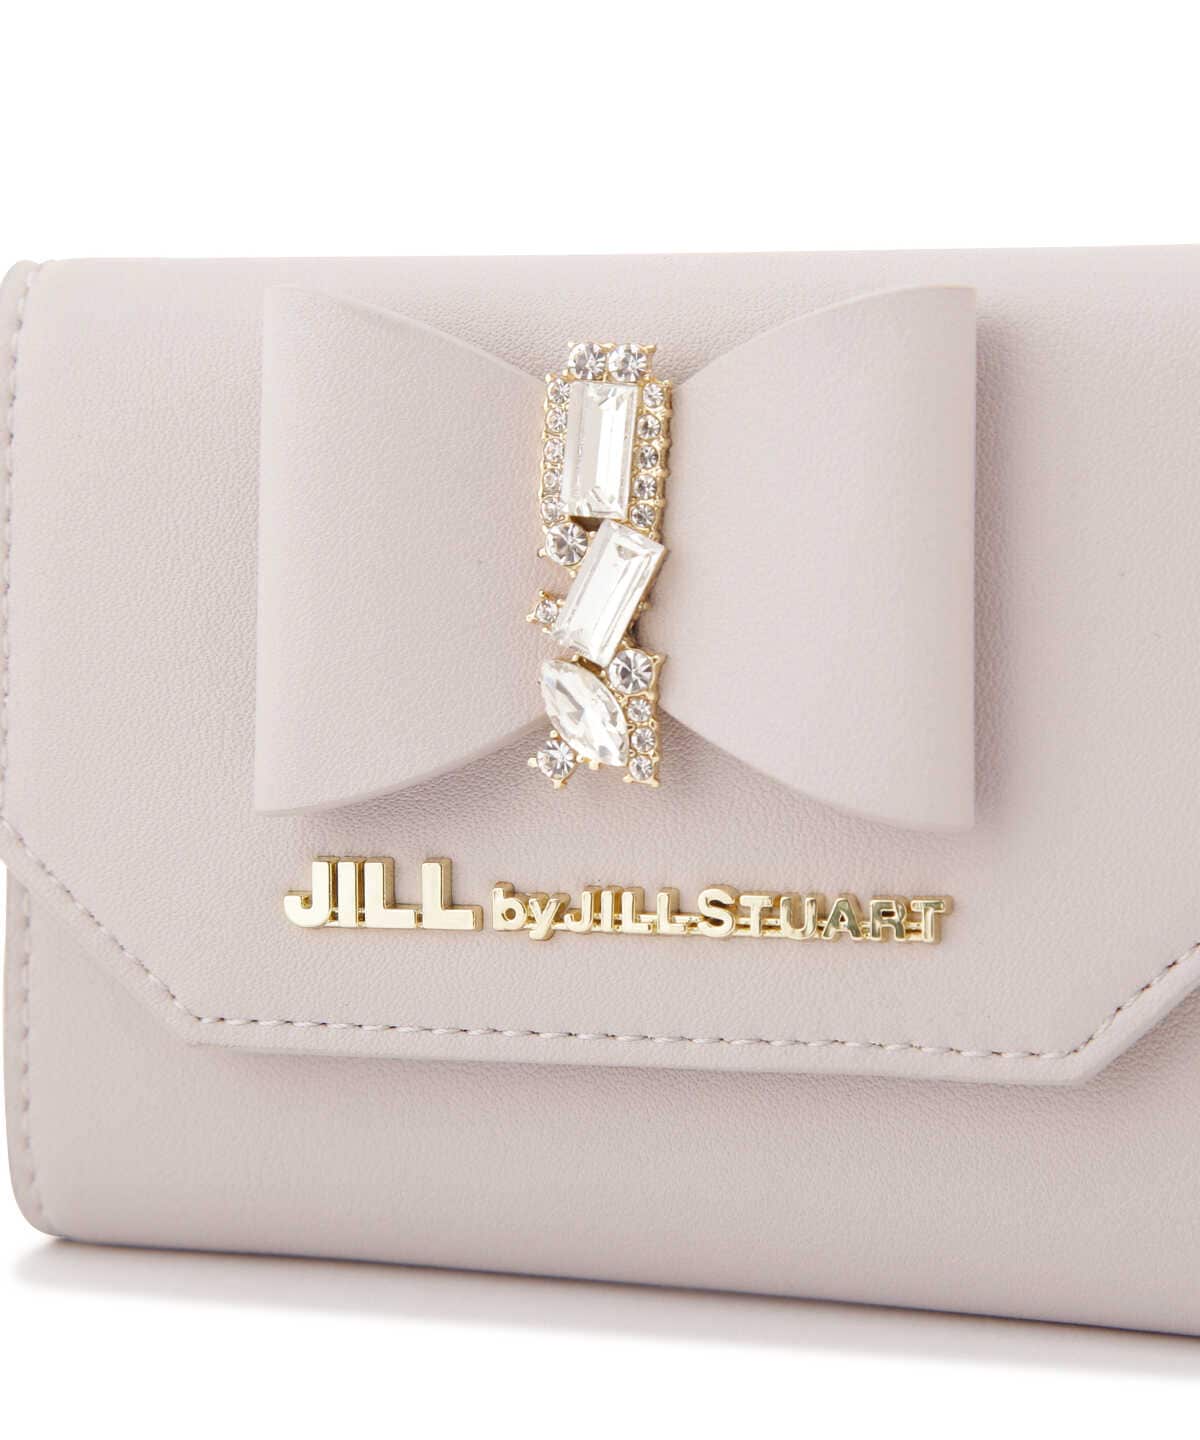 JILL by JILL STUART リボンビジューウォレットシリーズ色はライトピンク2です